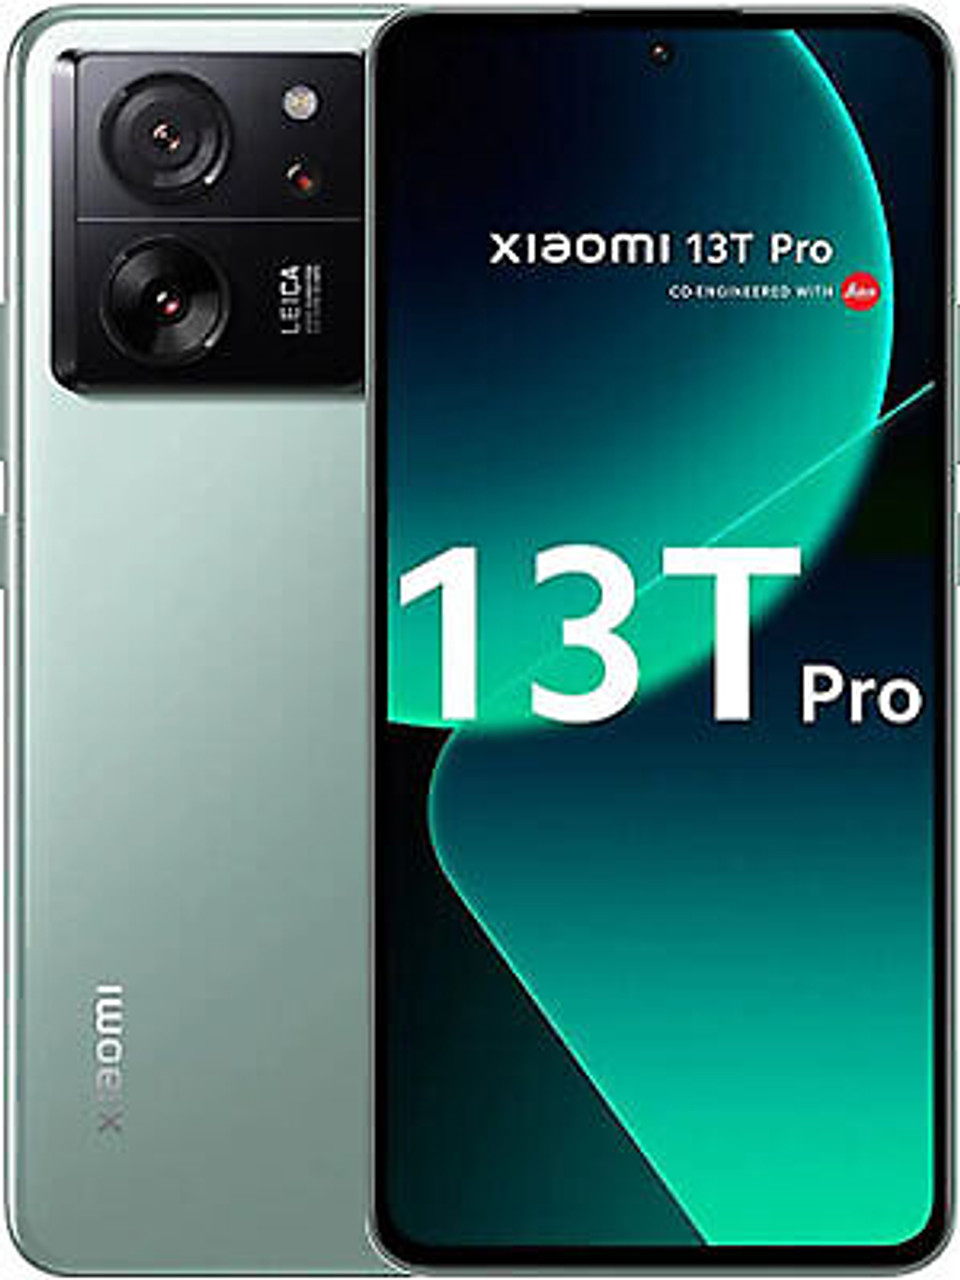 UNLOCKED) XIAOMI 13T Pro 5G Dual SIM AU Android Mobile Phone – Green/16GB+ 1TB $1,453.45 - PicClick AU